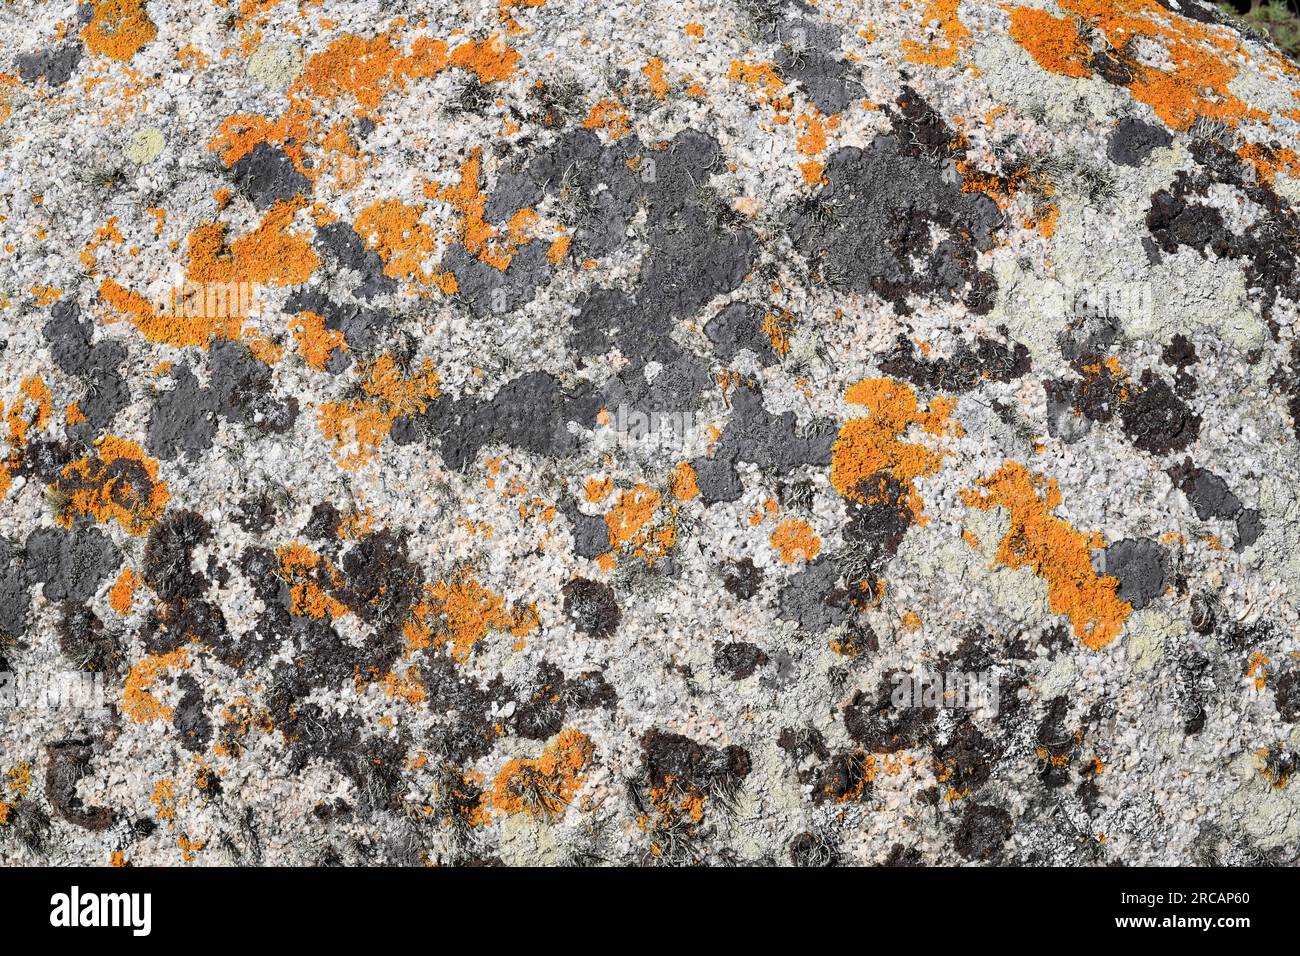 Lichens crustoses Caloplaca (orange), Verrucaria (black) and fruticose Ramalina. This photo was taken in A Coruña coast, Galicia, Spain. Stock Photo